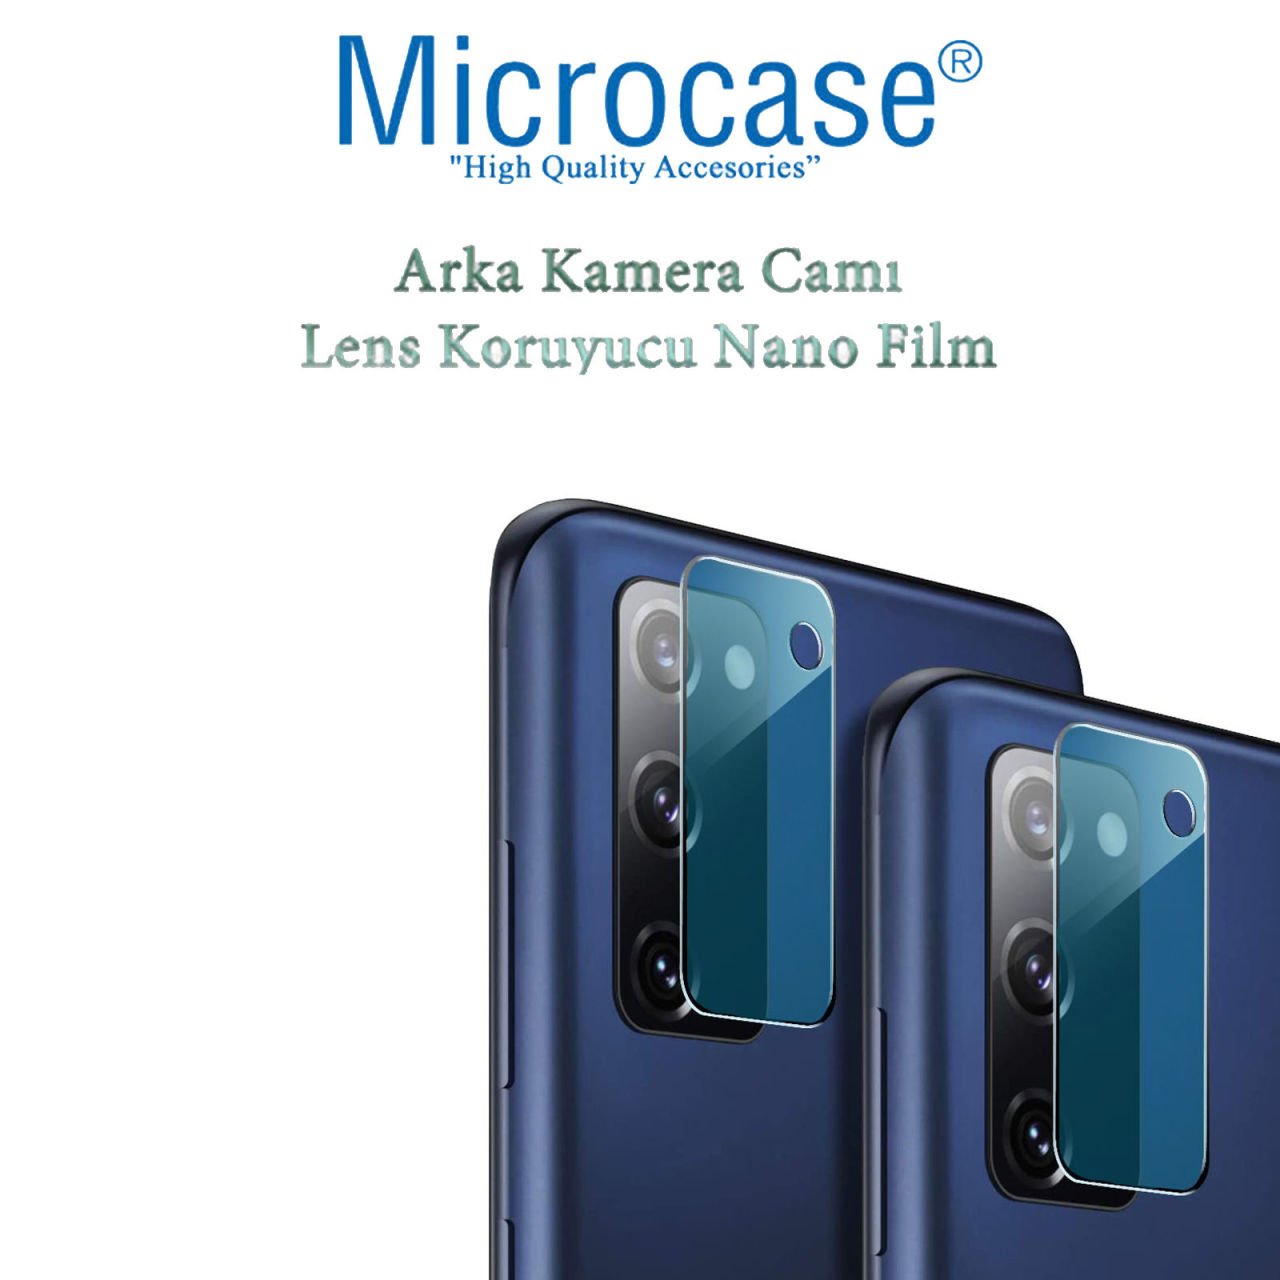 Microcase Samsung Galaxy S20 FE Fan Edition Kamera Camı Lens Koruyucu Nano Esnek Film